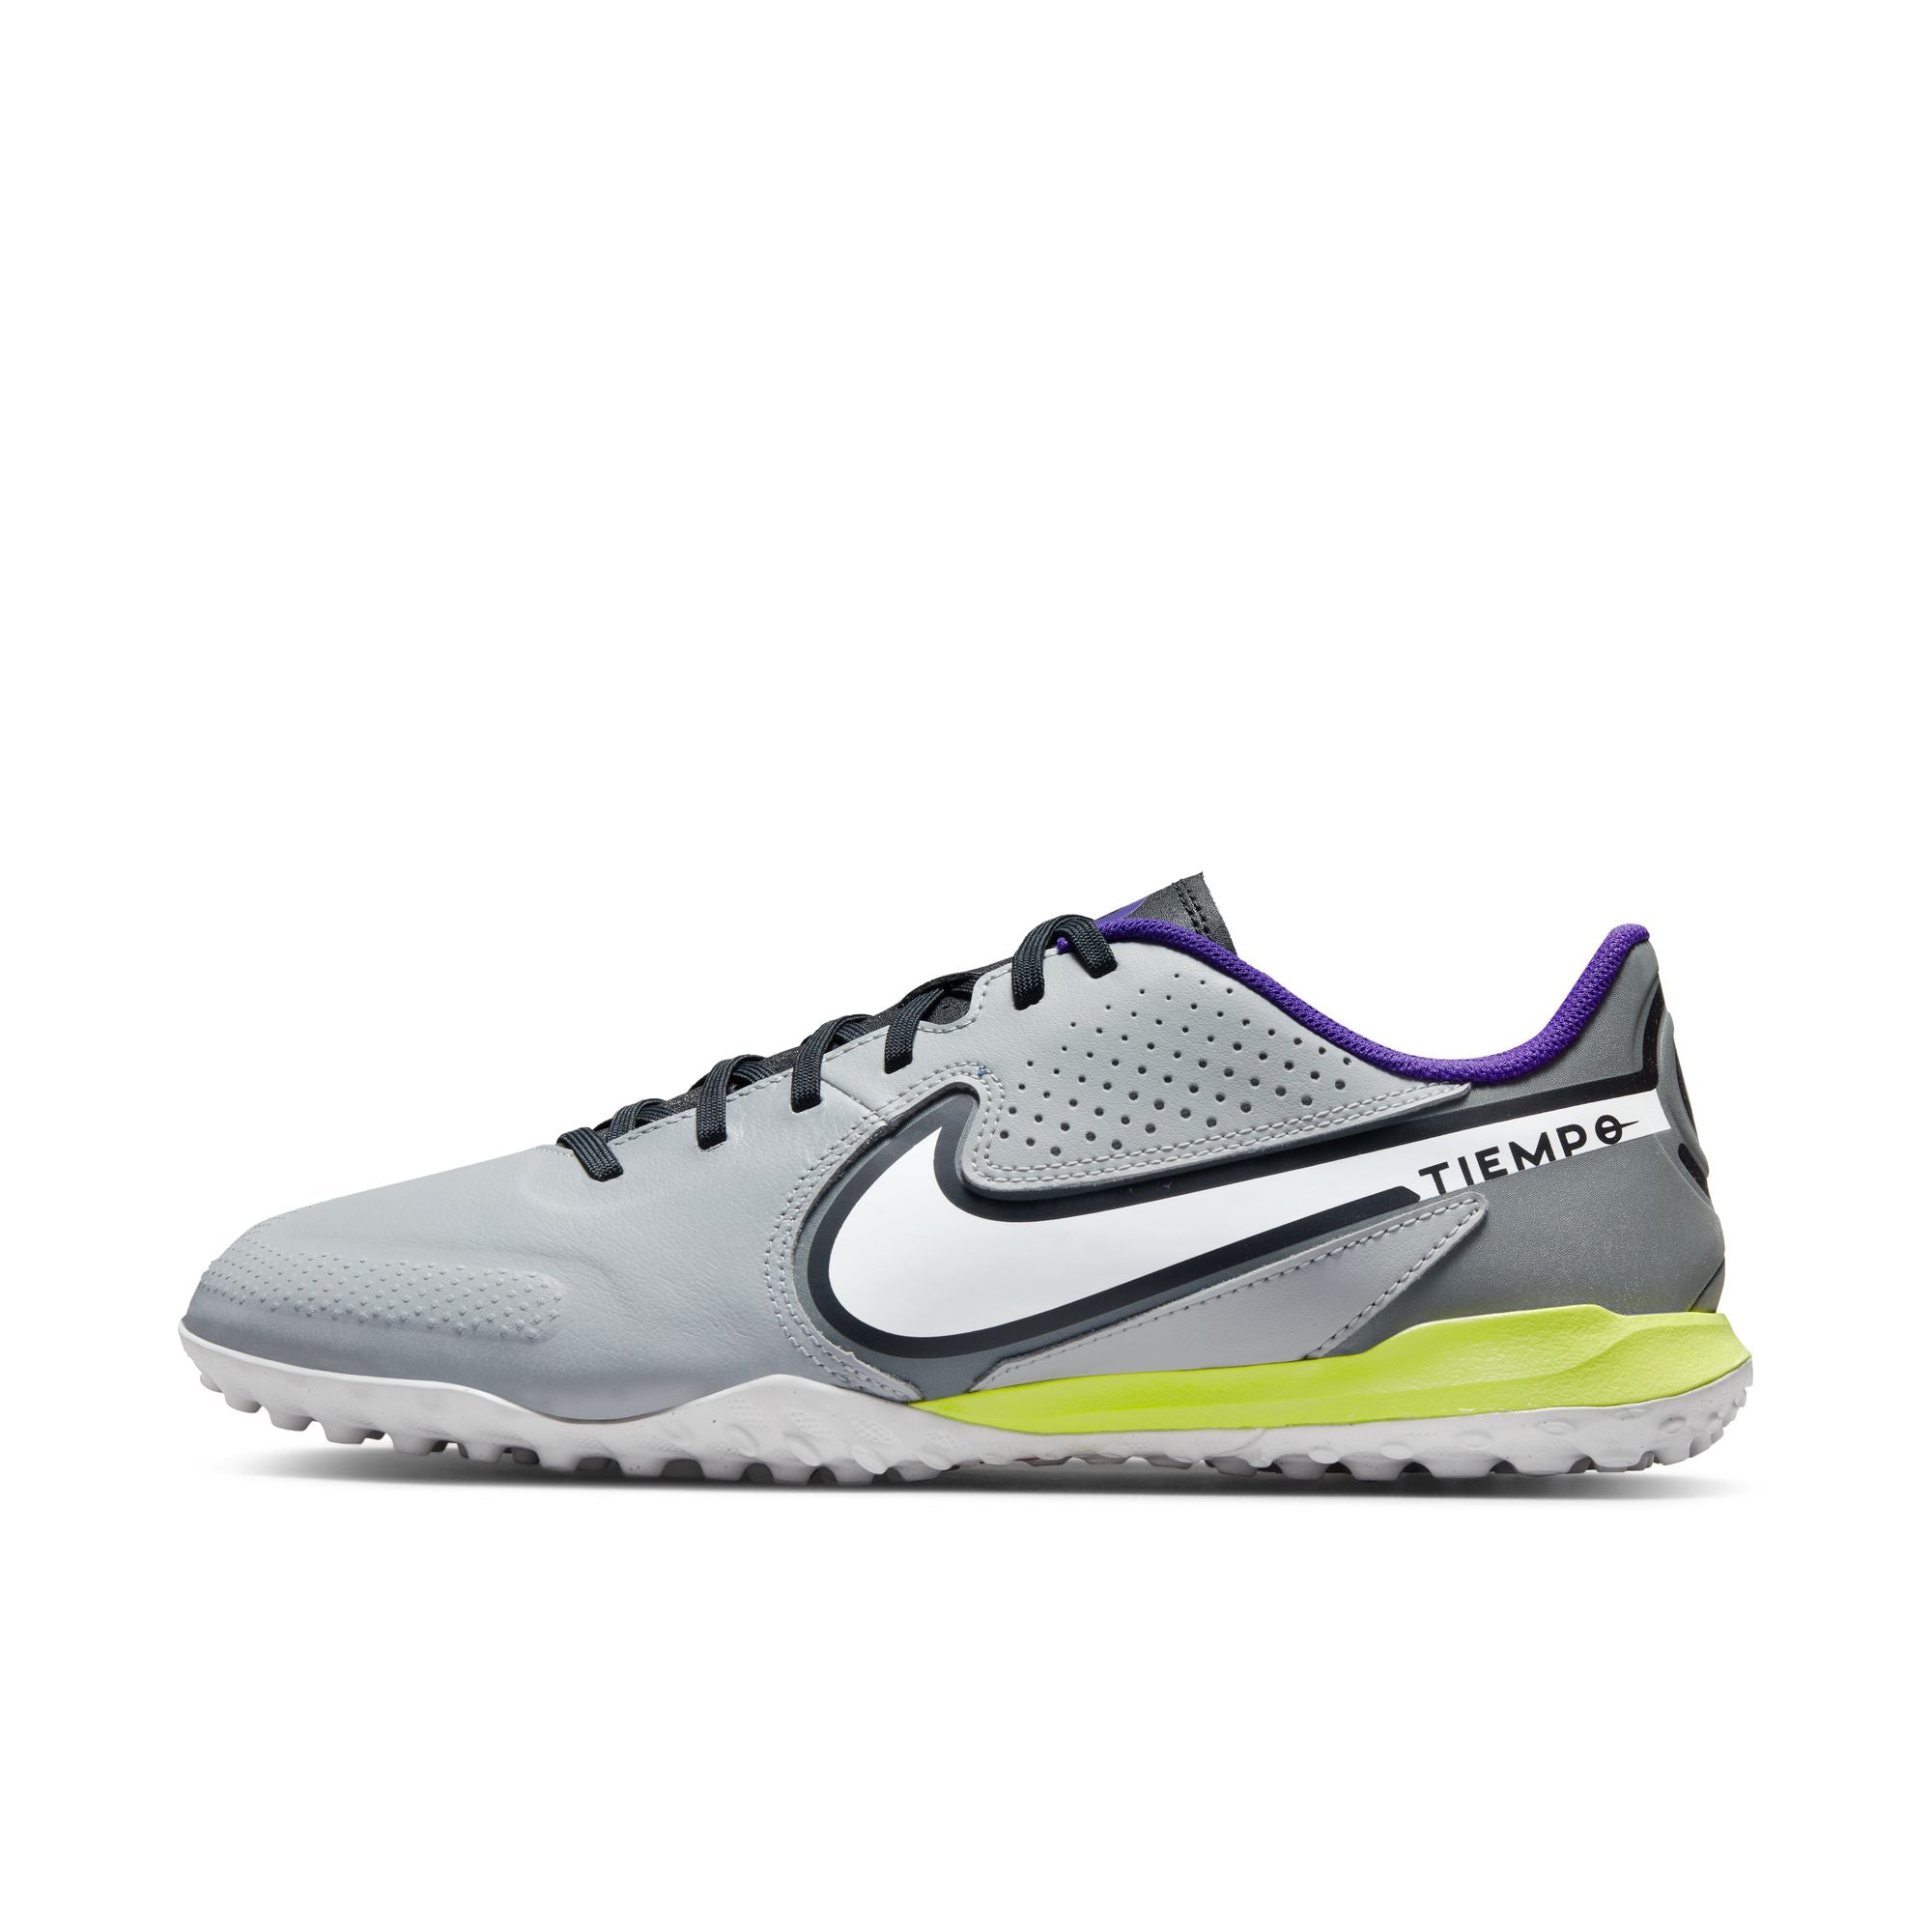 Nike 9 TF Turf Soccer Shoe